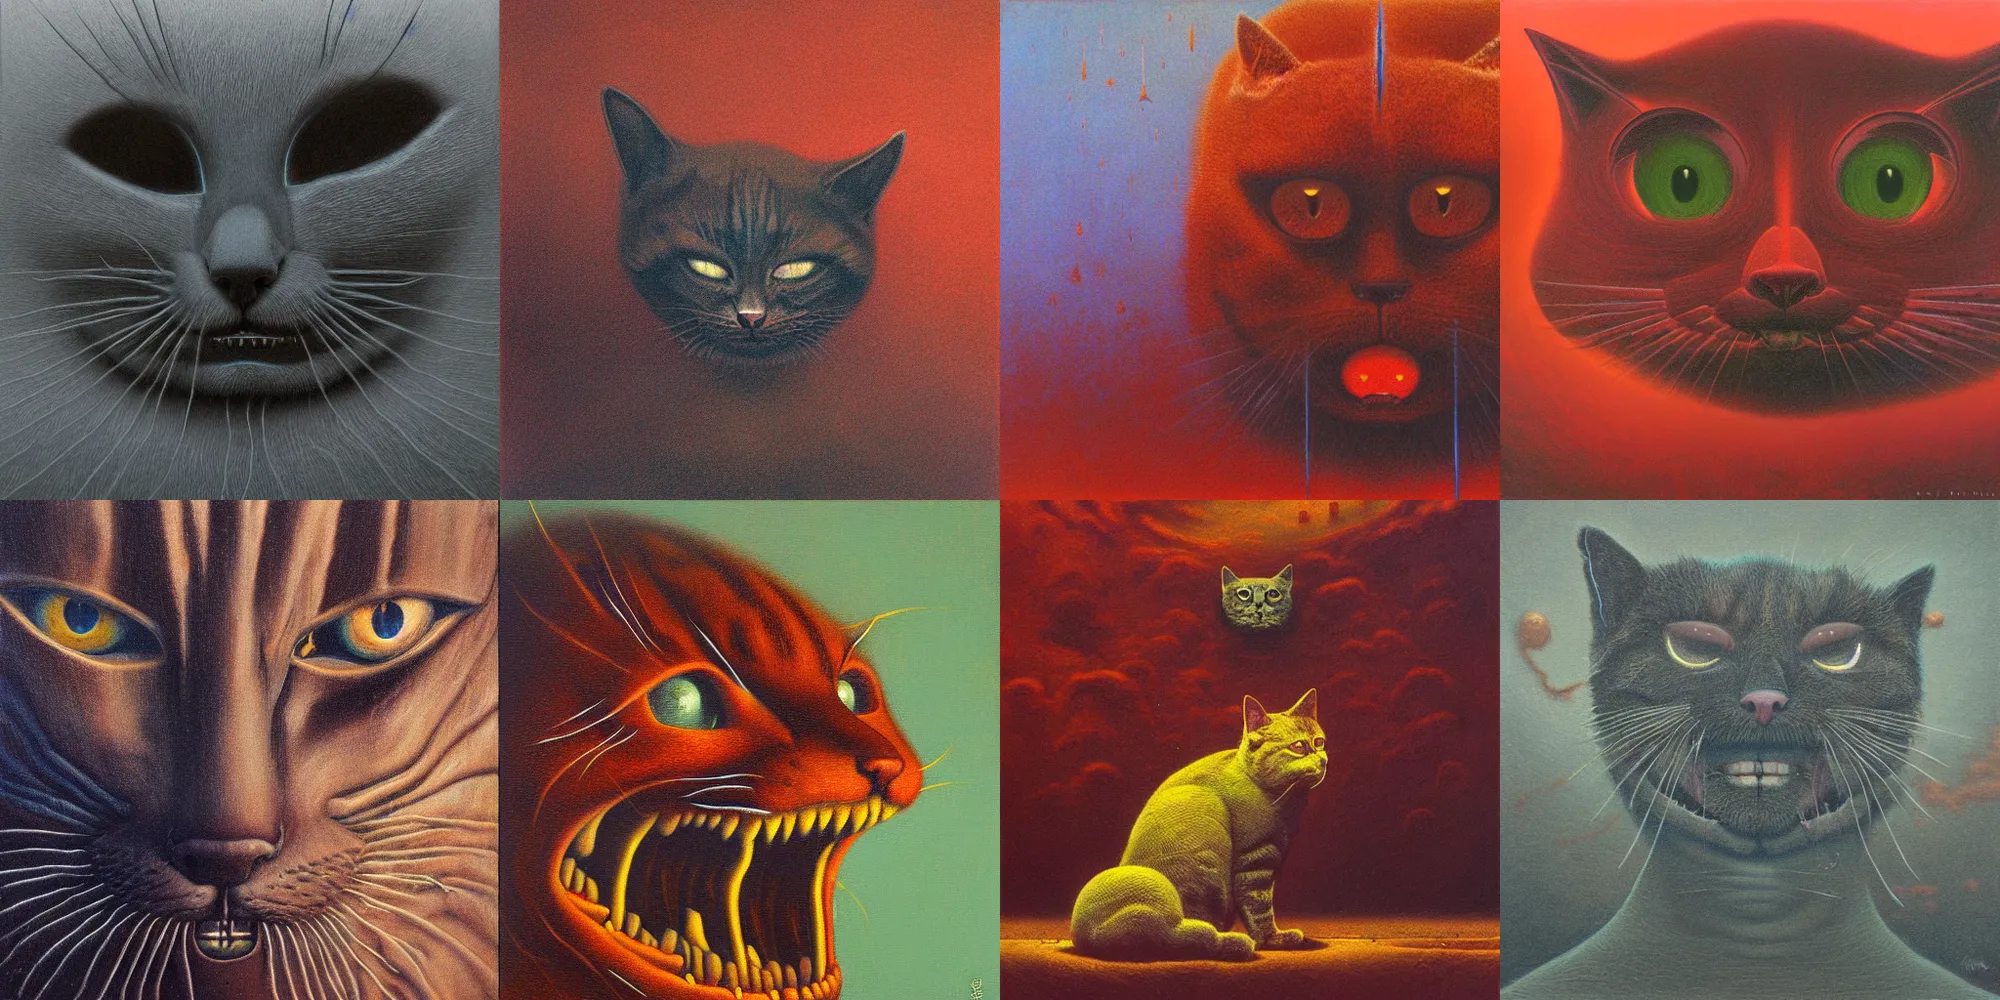 Prompt: grinning evil cat, HD, award winning, in style of beksinski, film grain, medium format, 8k resolution, oil on canvas